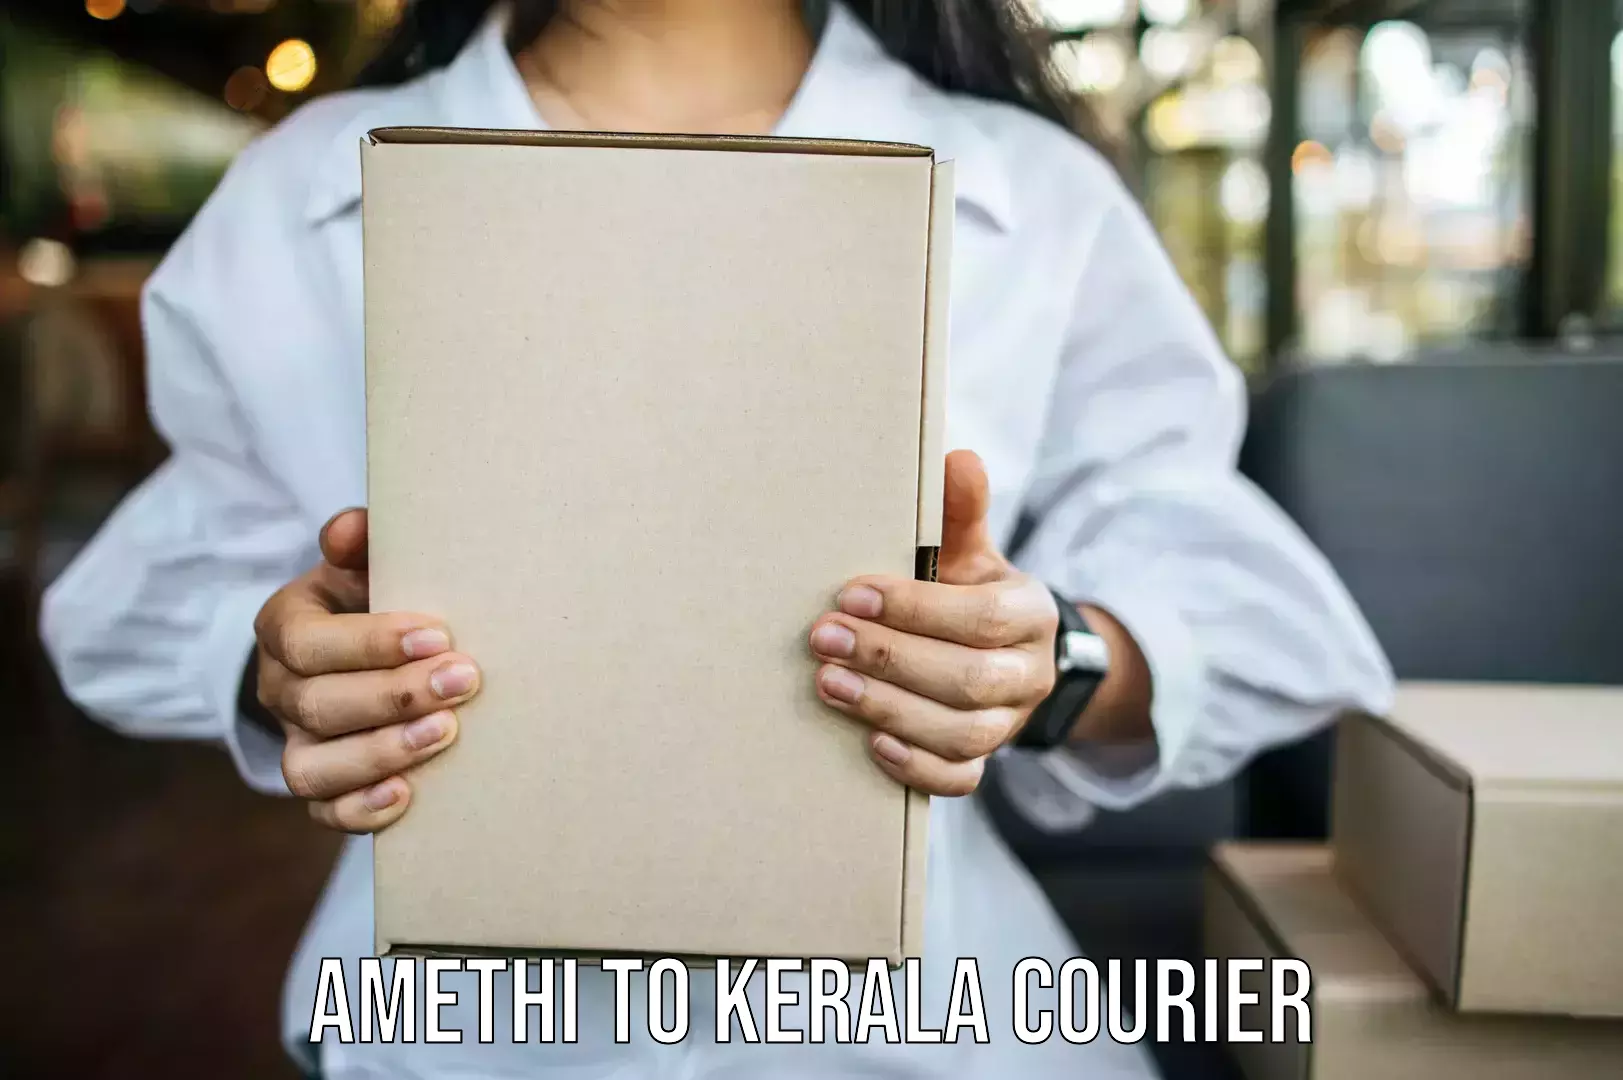 Home shifting experts Amethi to Kerala